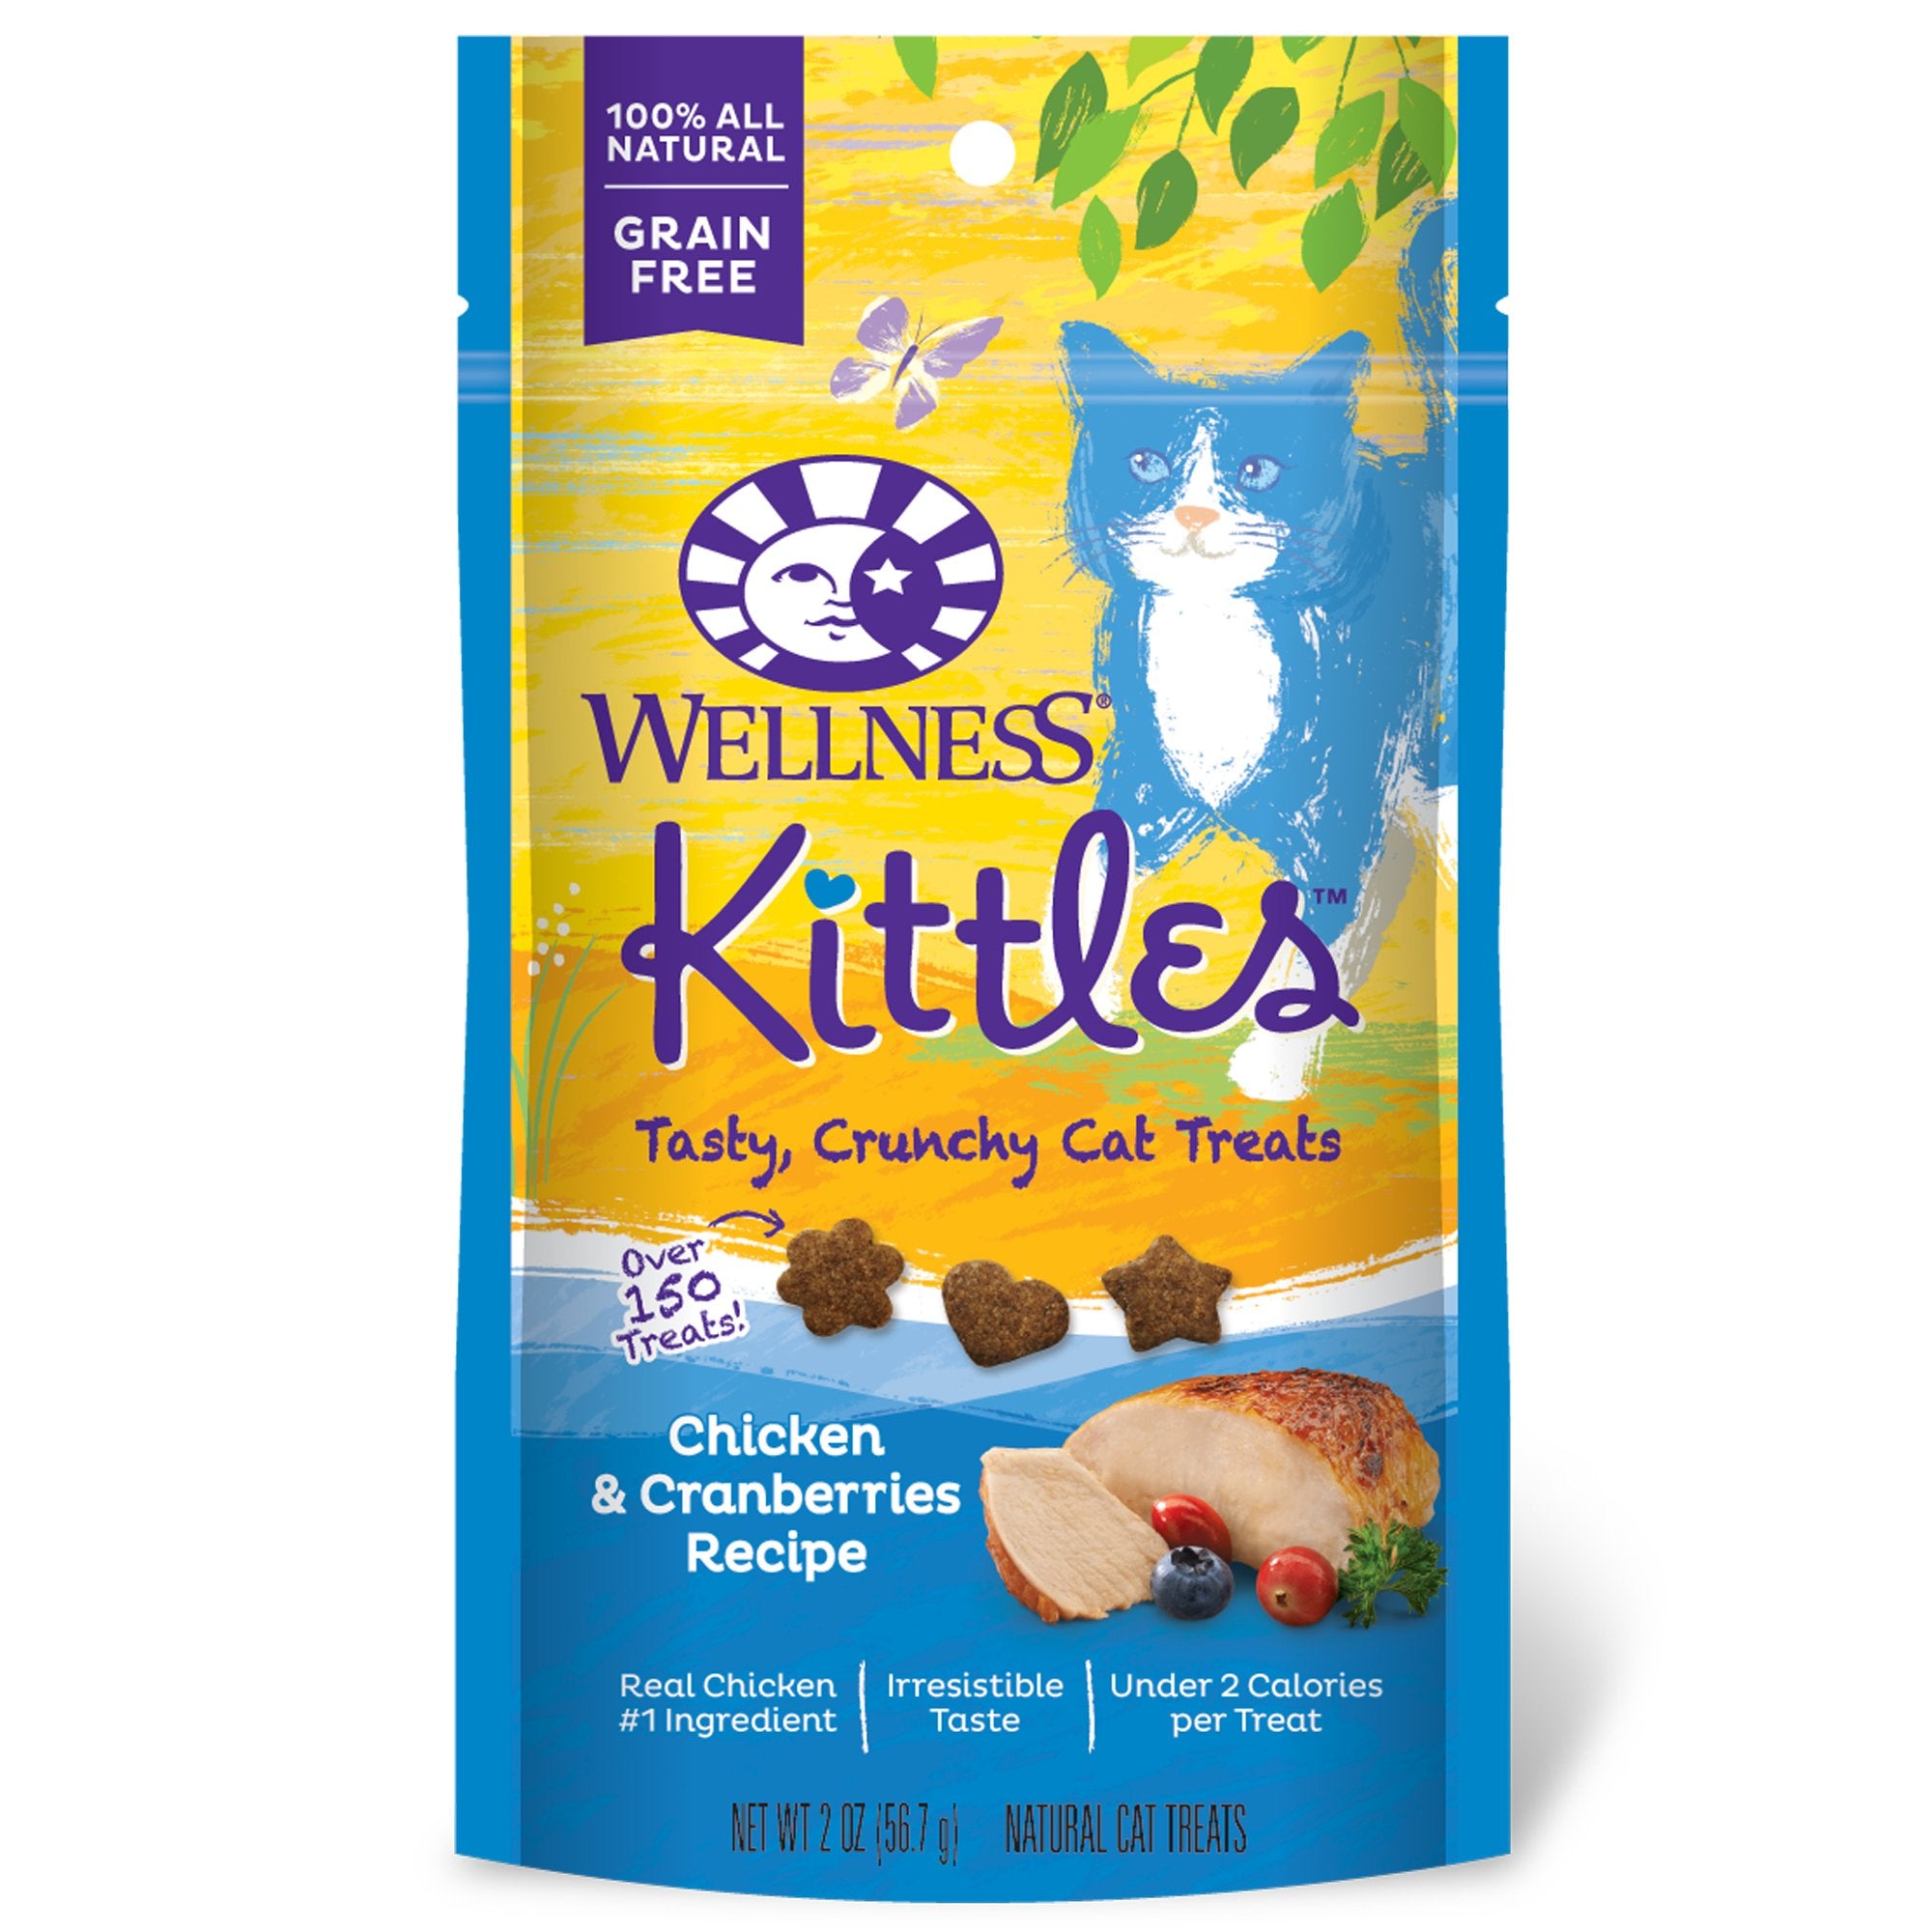 Wellness Kittles Chicken & Cranberries